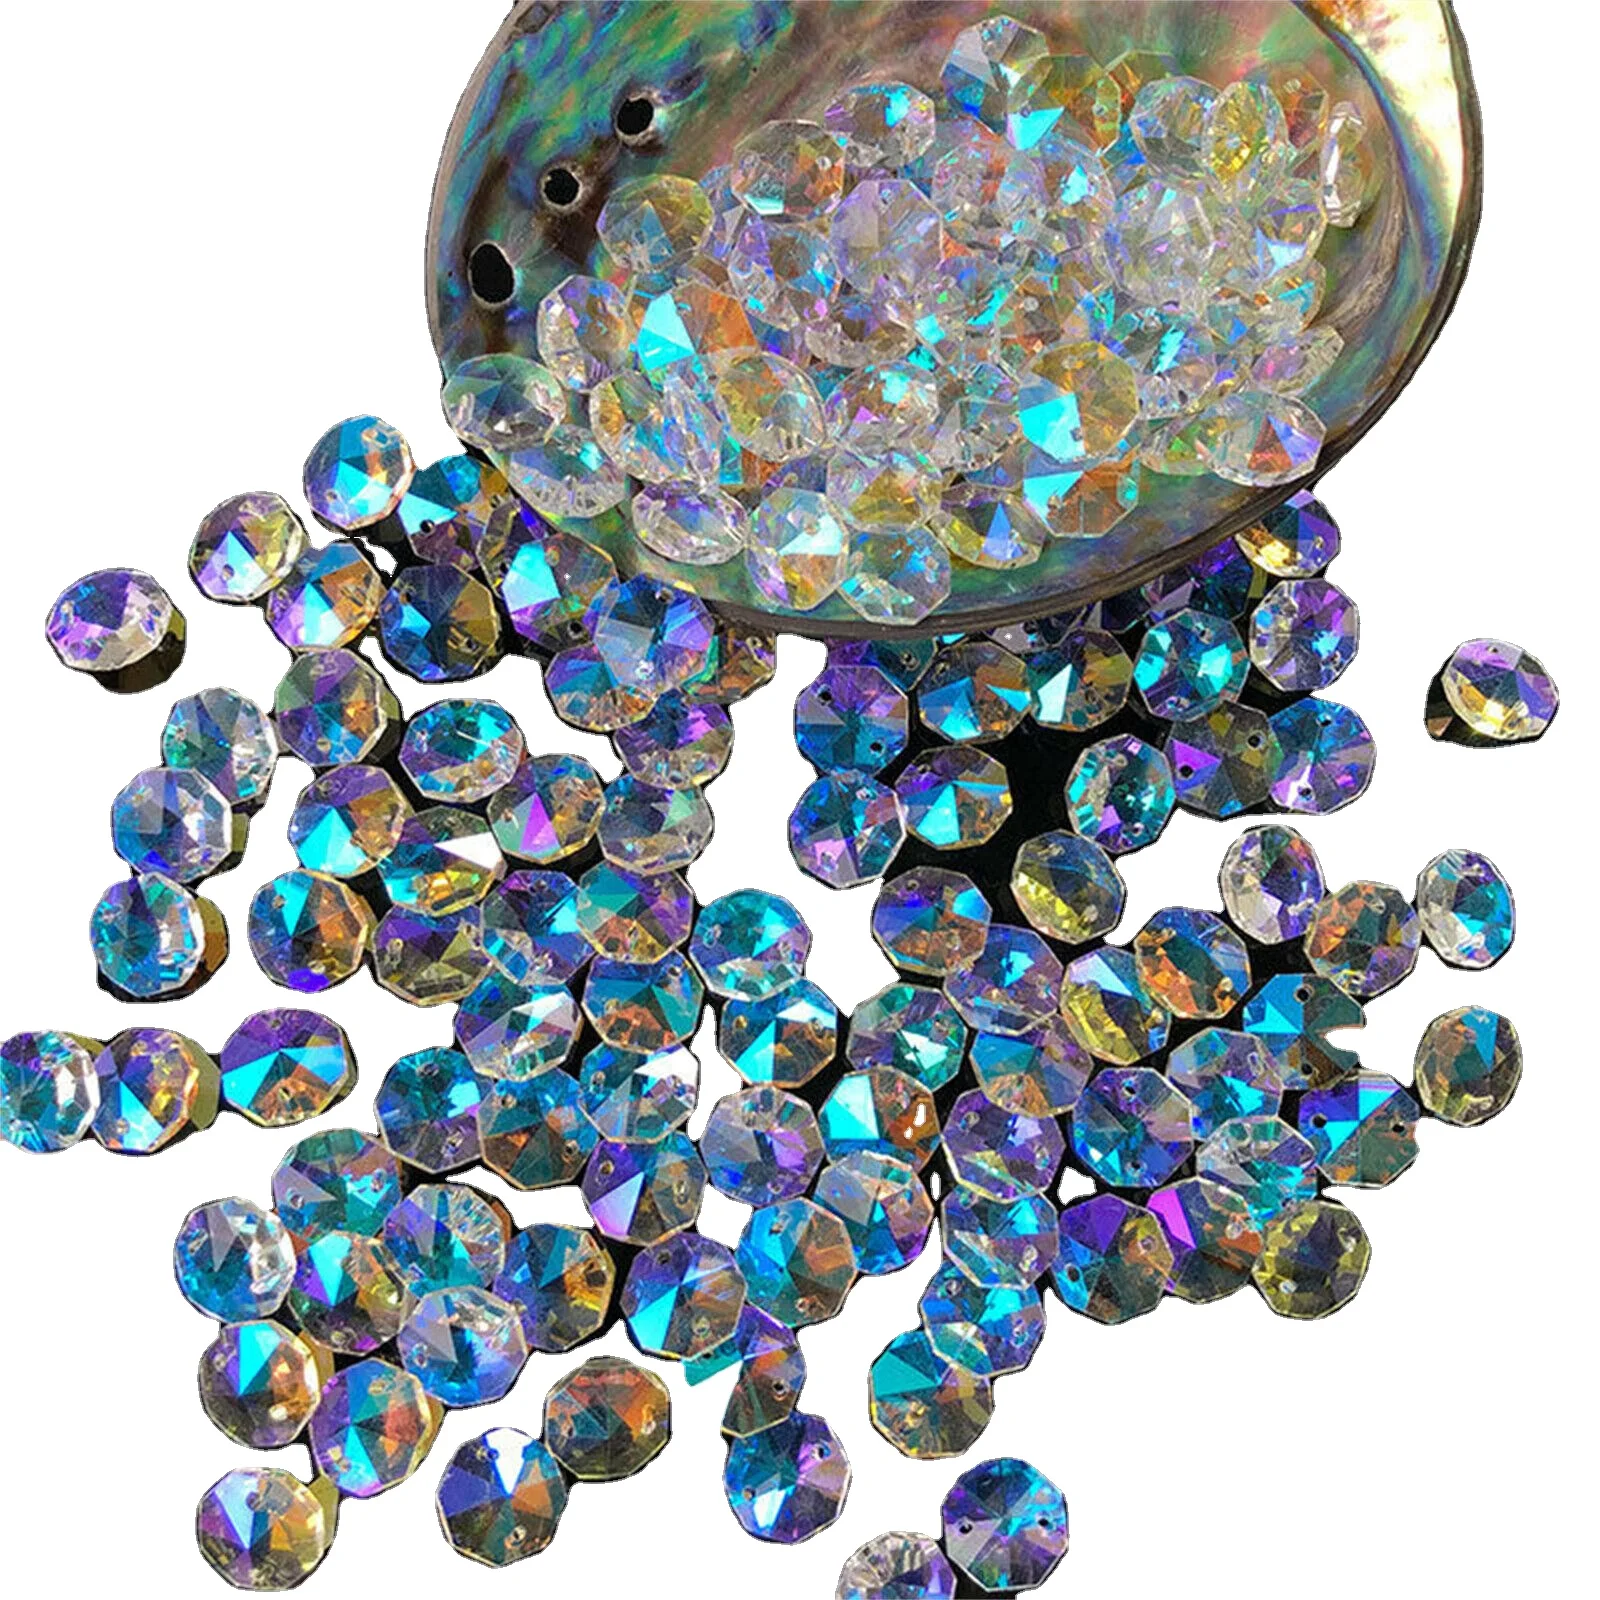 

2 Holes Octagon Beads Ab Colour Crystal Glass Suncatchers Chandeliers 14mm Chain Part DIY Octagon Bead Ornament